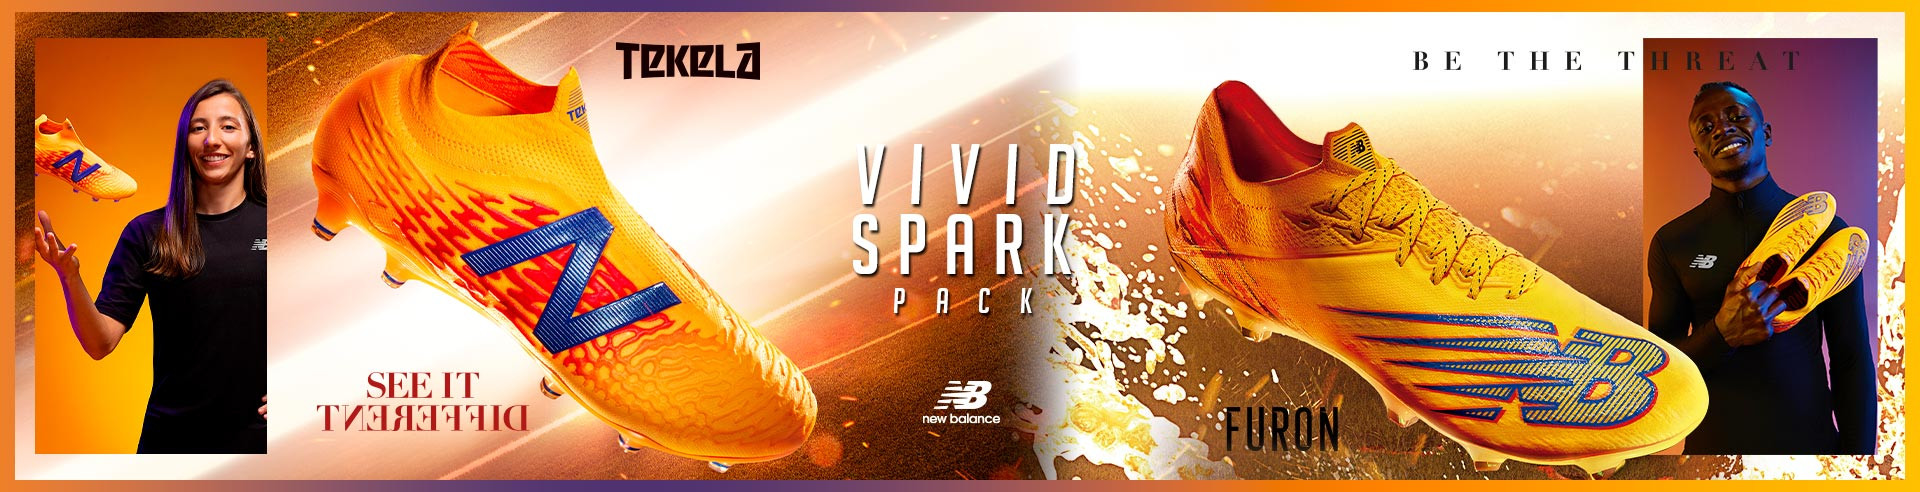 NEW BALANCE VIVID SPARK PACK JUNIO 2022